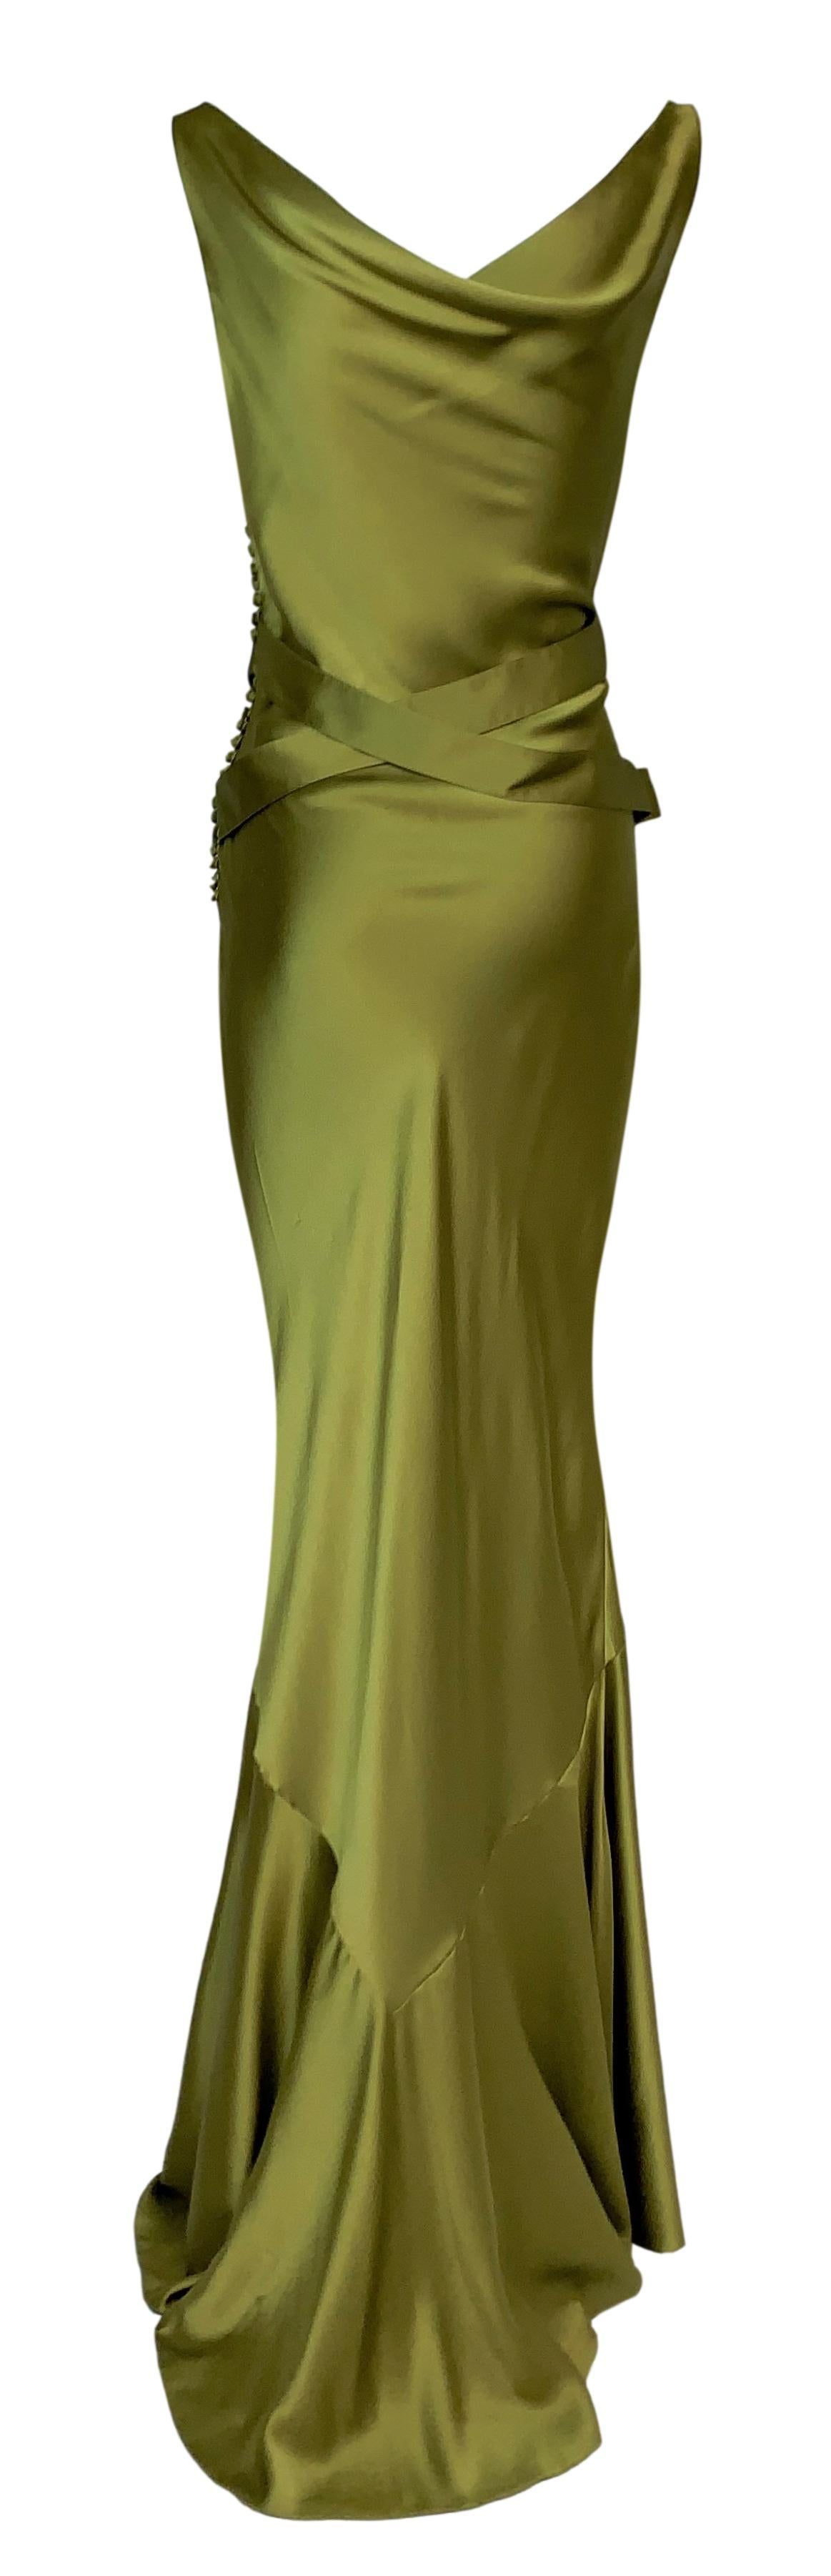 john galliano green dress